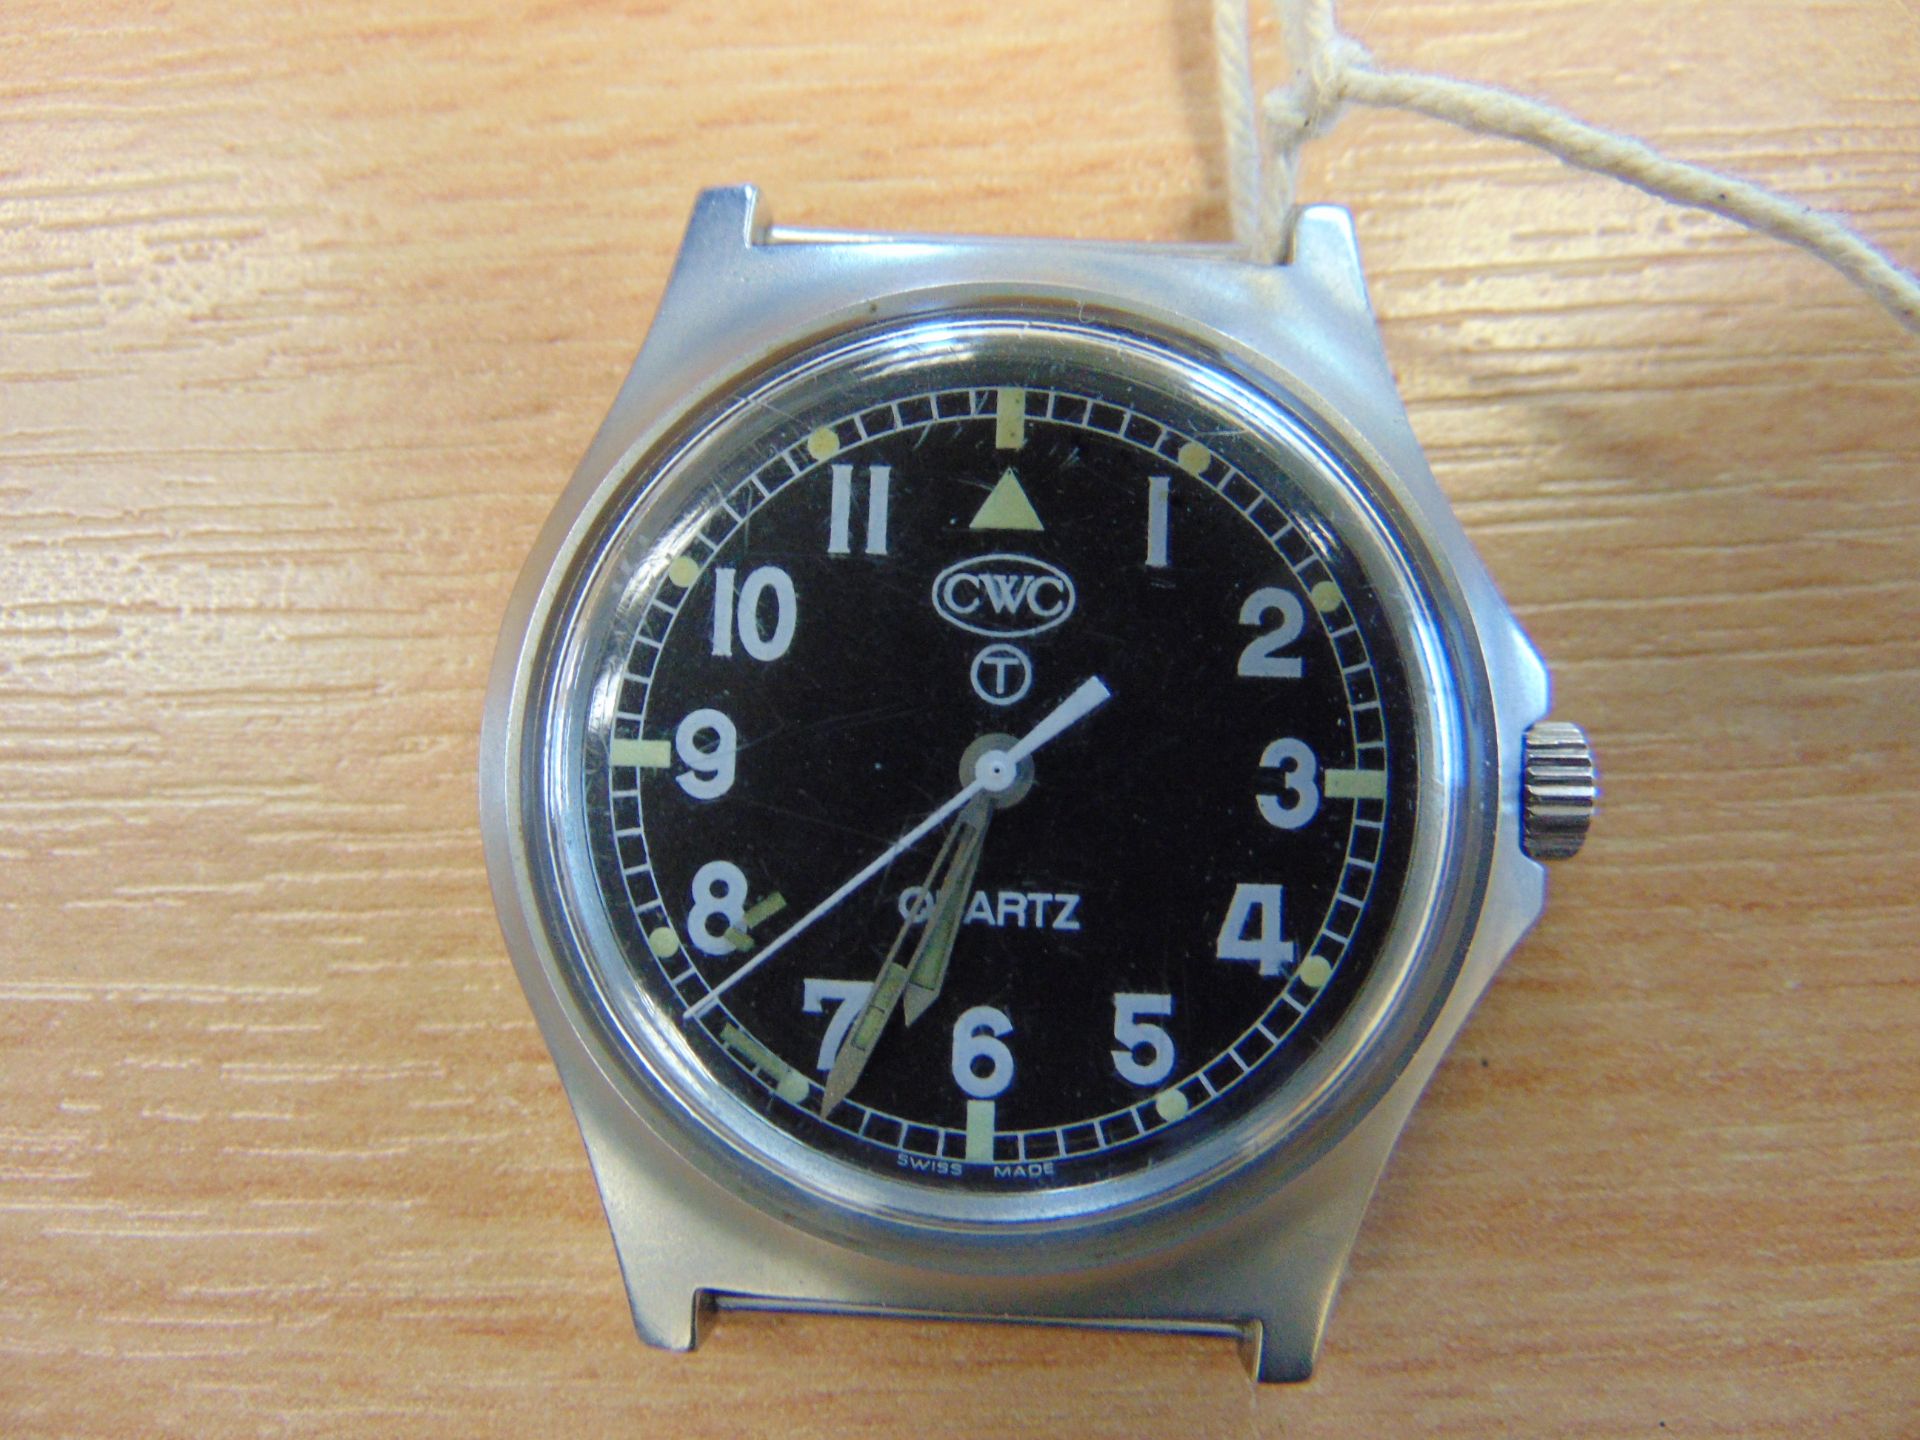 CWC British Army W10 Service Watch Nato Marks, Date 2005